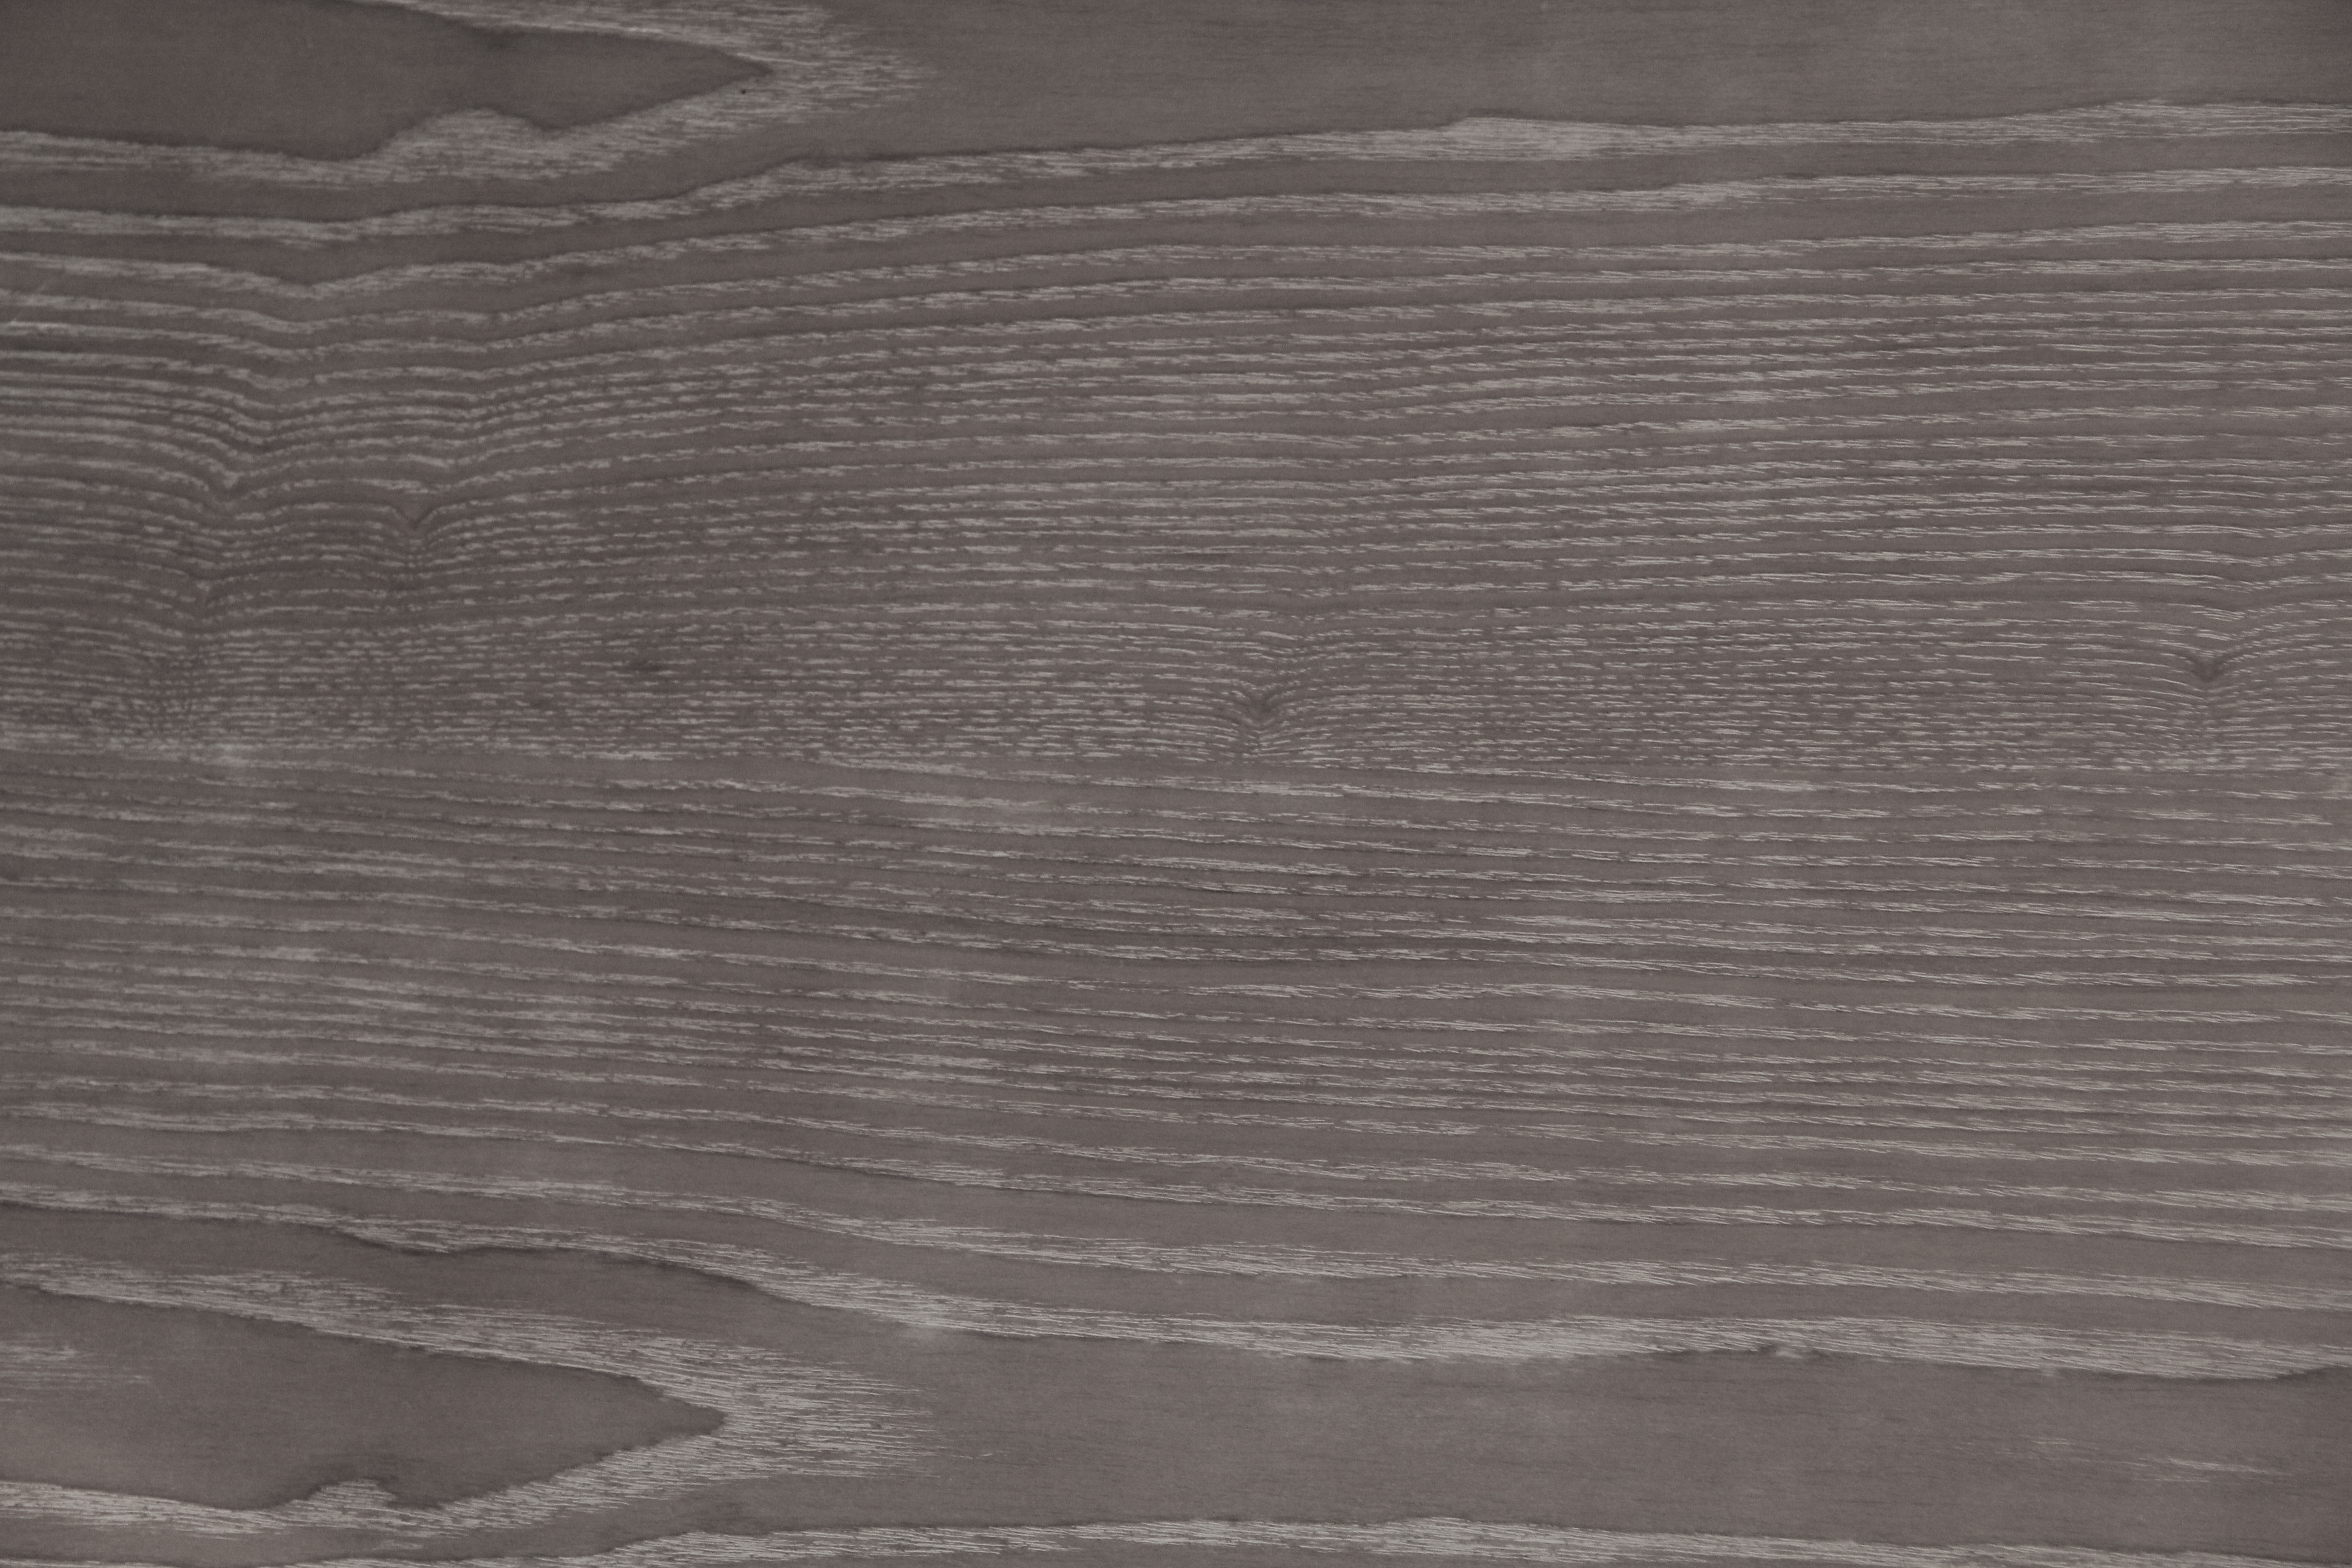  grey  wood  texture  dark grain wooden surface design stock 